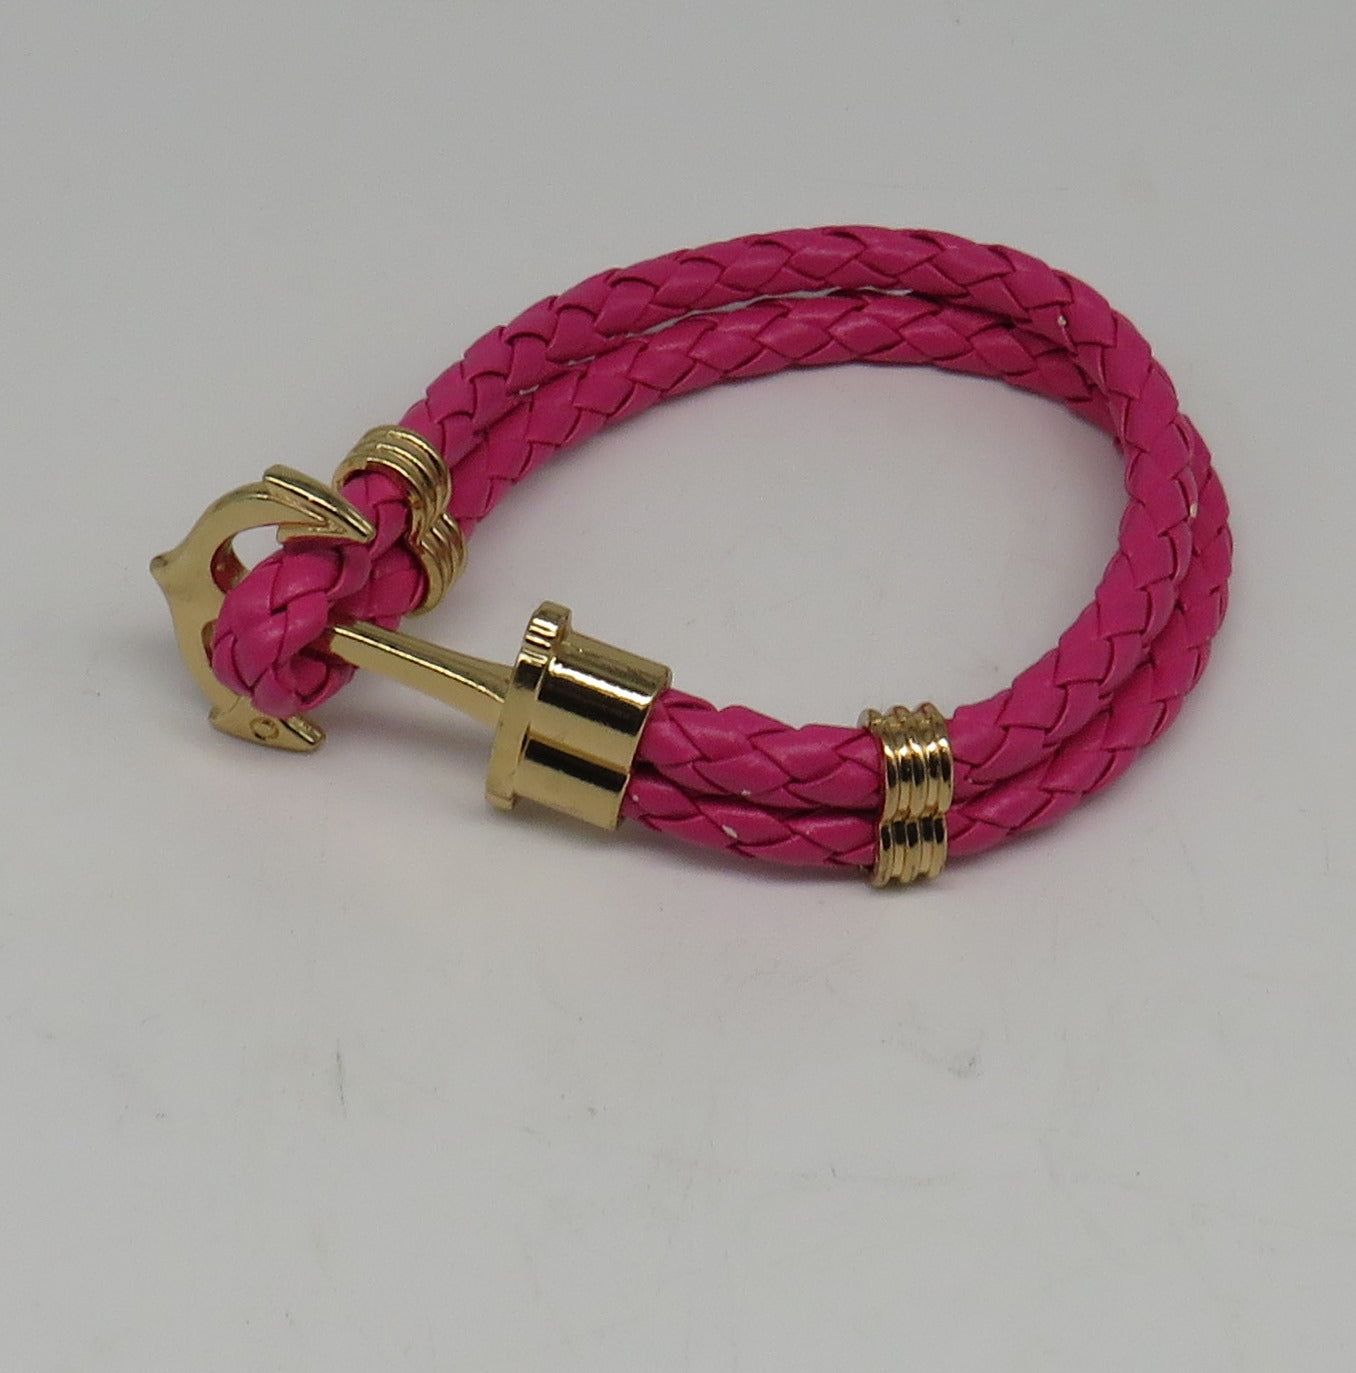 Unisex Leather Handmade Braided Cuff Anchor Bangle Bracelet Wristband Rose Red-Gold